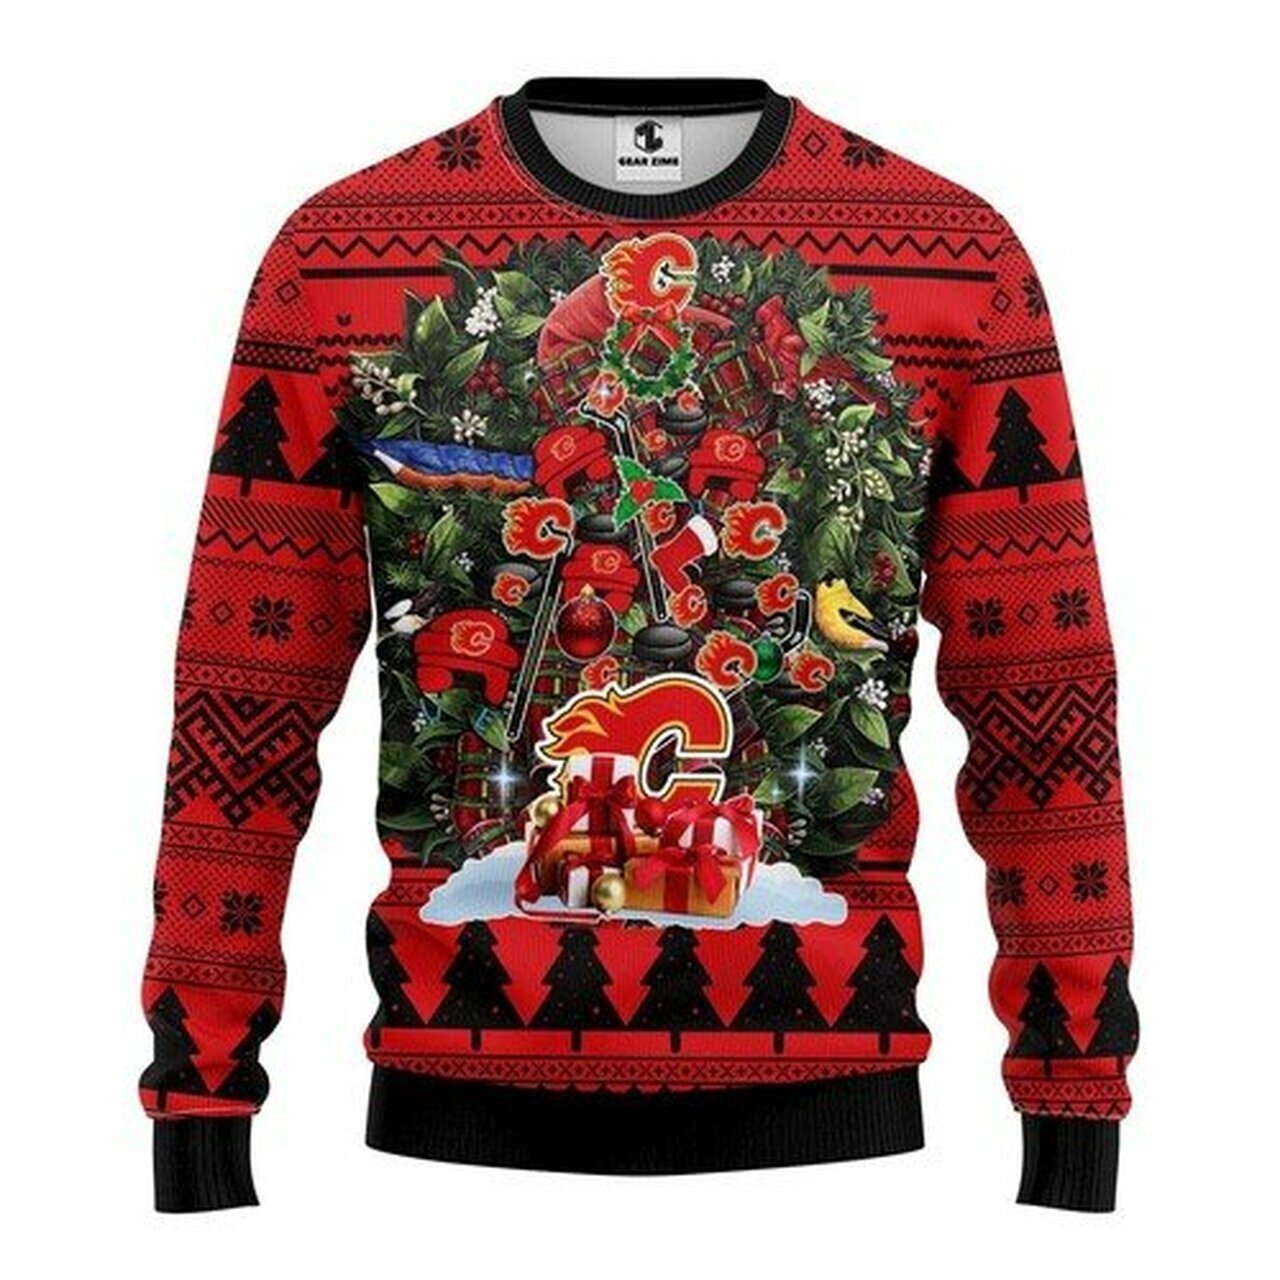 NHL Calgary Flames christmas tree ugly sweater